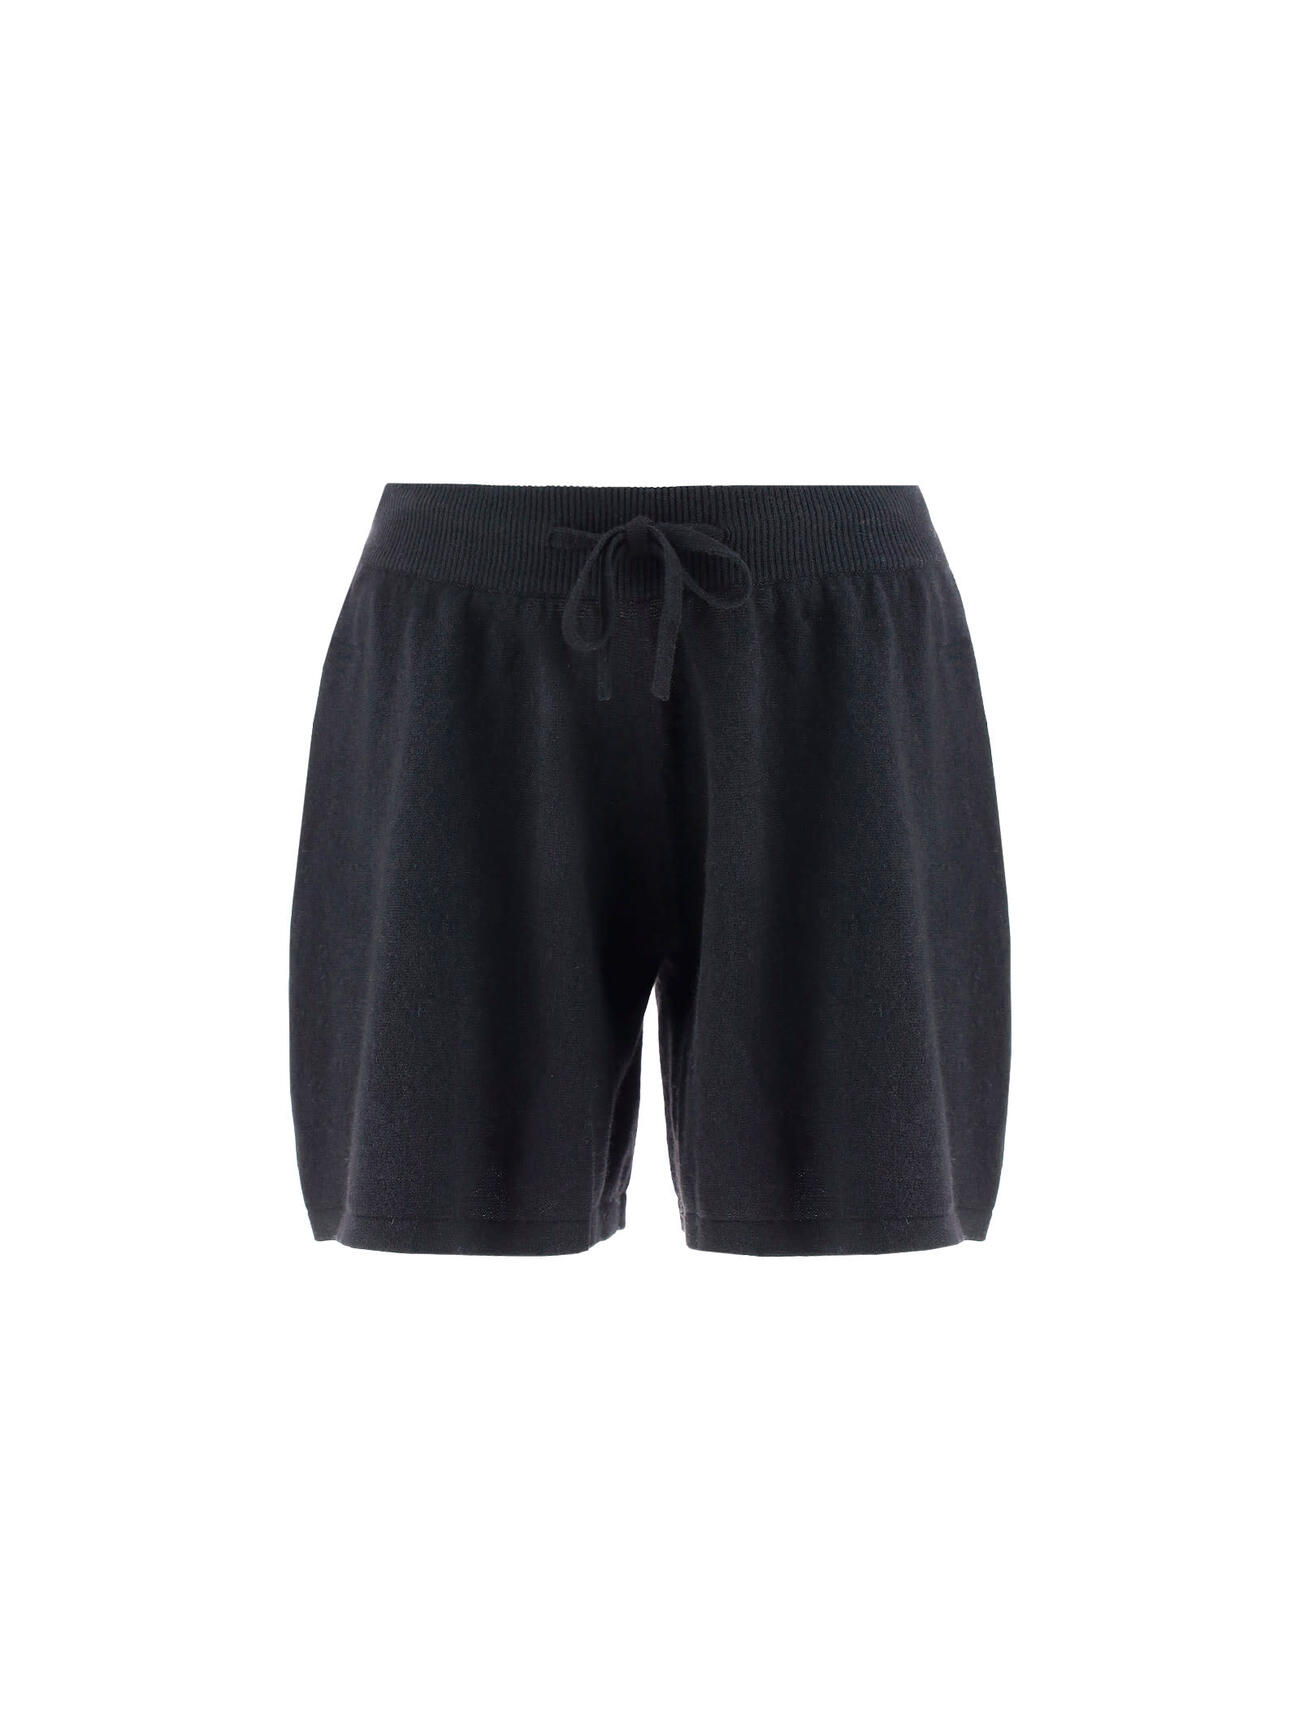 Lisa Yang Gio Shorts in black